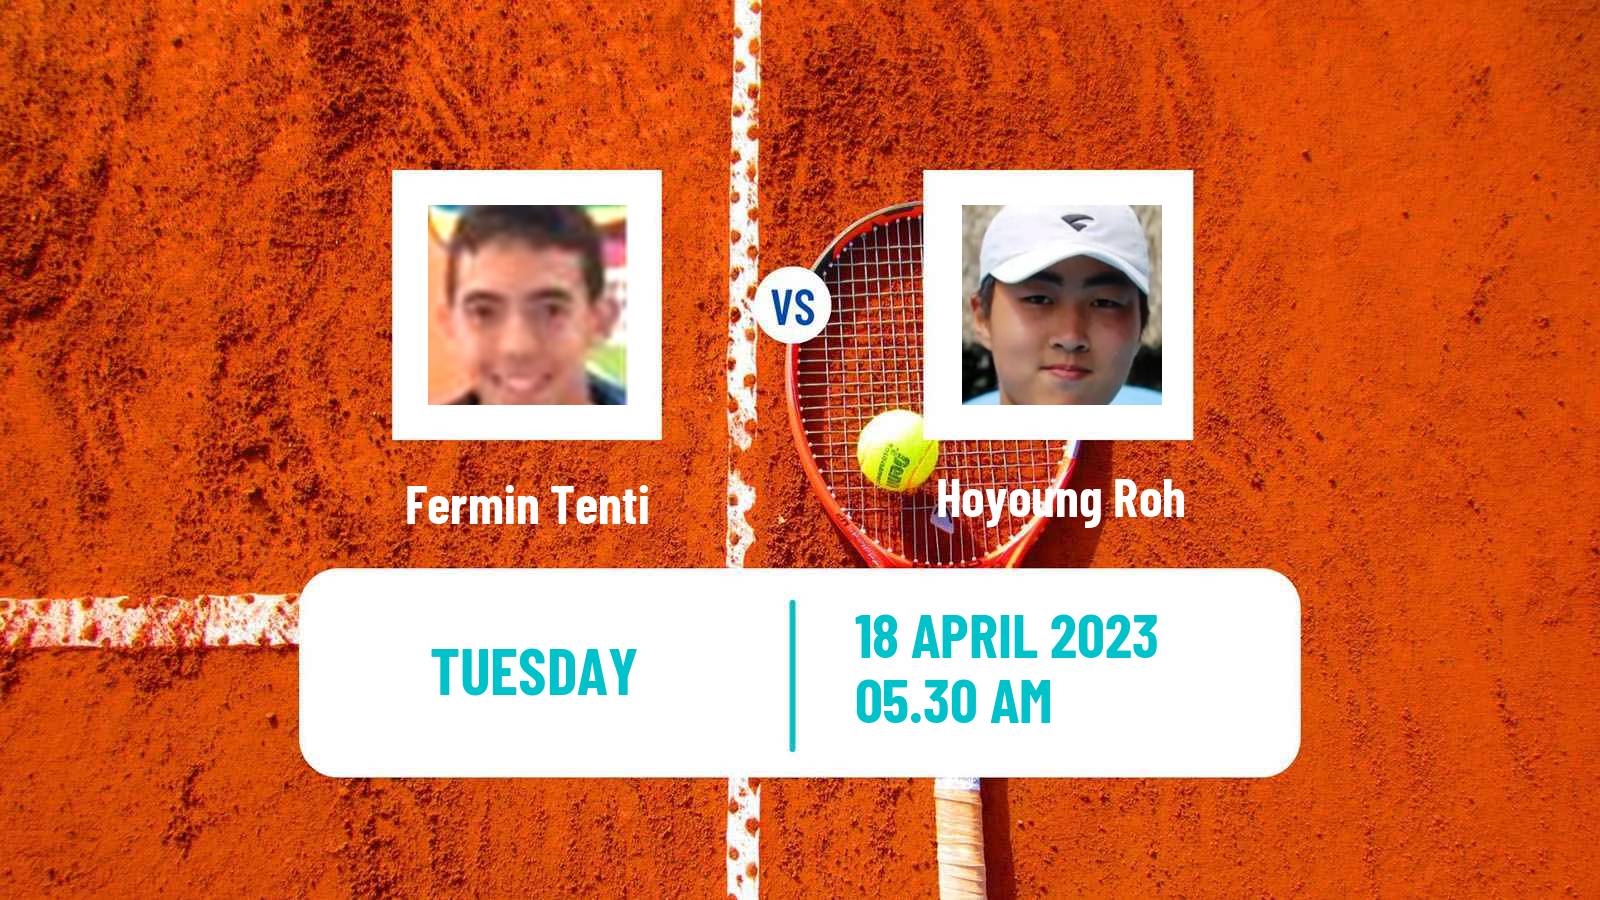 Tennis ITF Tournaments Fermin Tenti - Hoyoung Roh